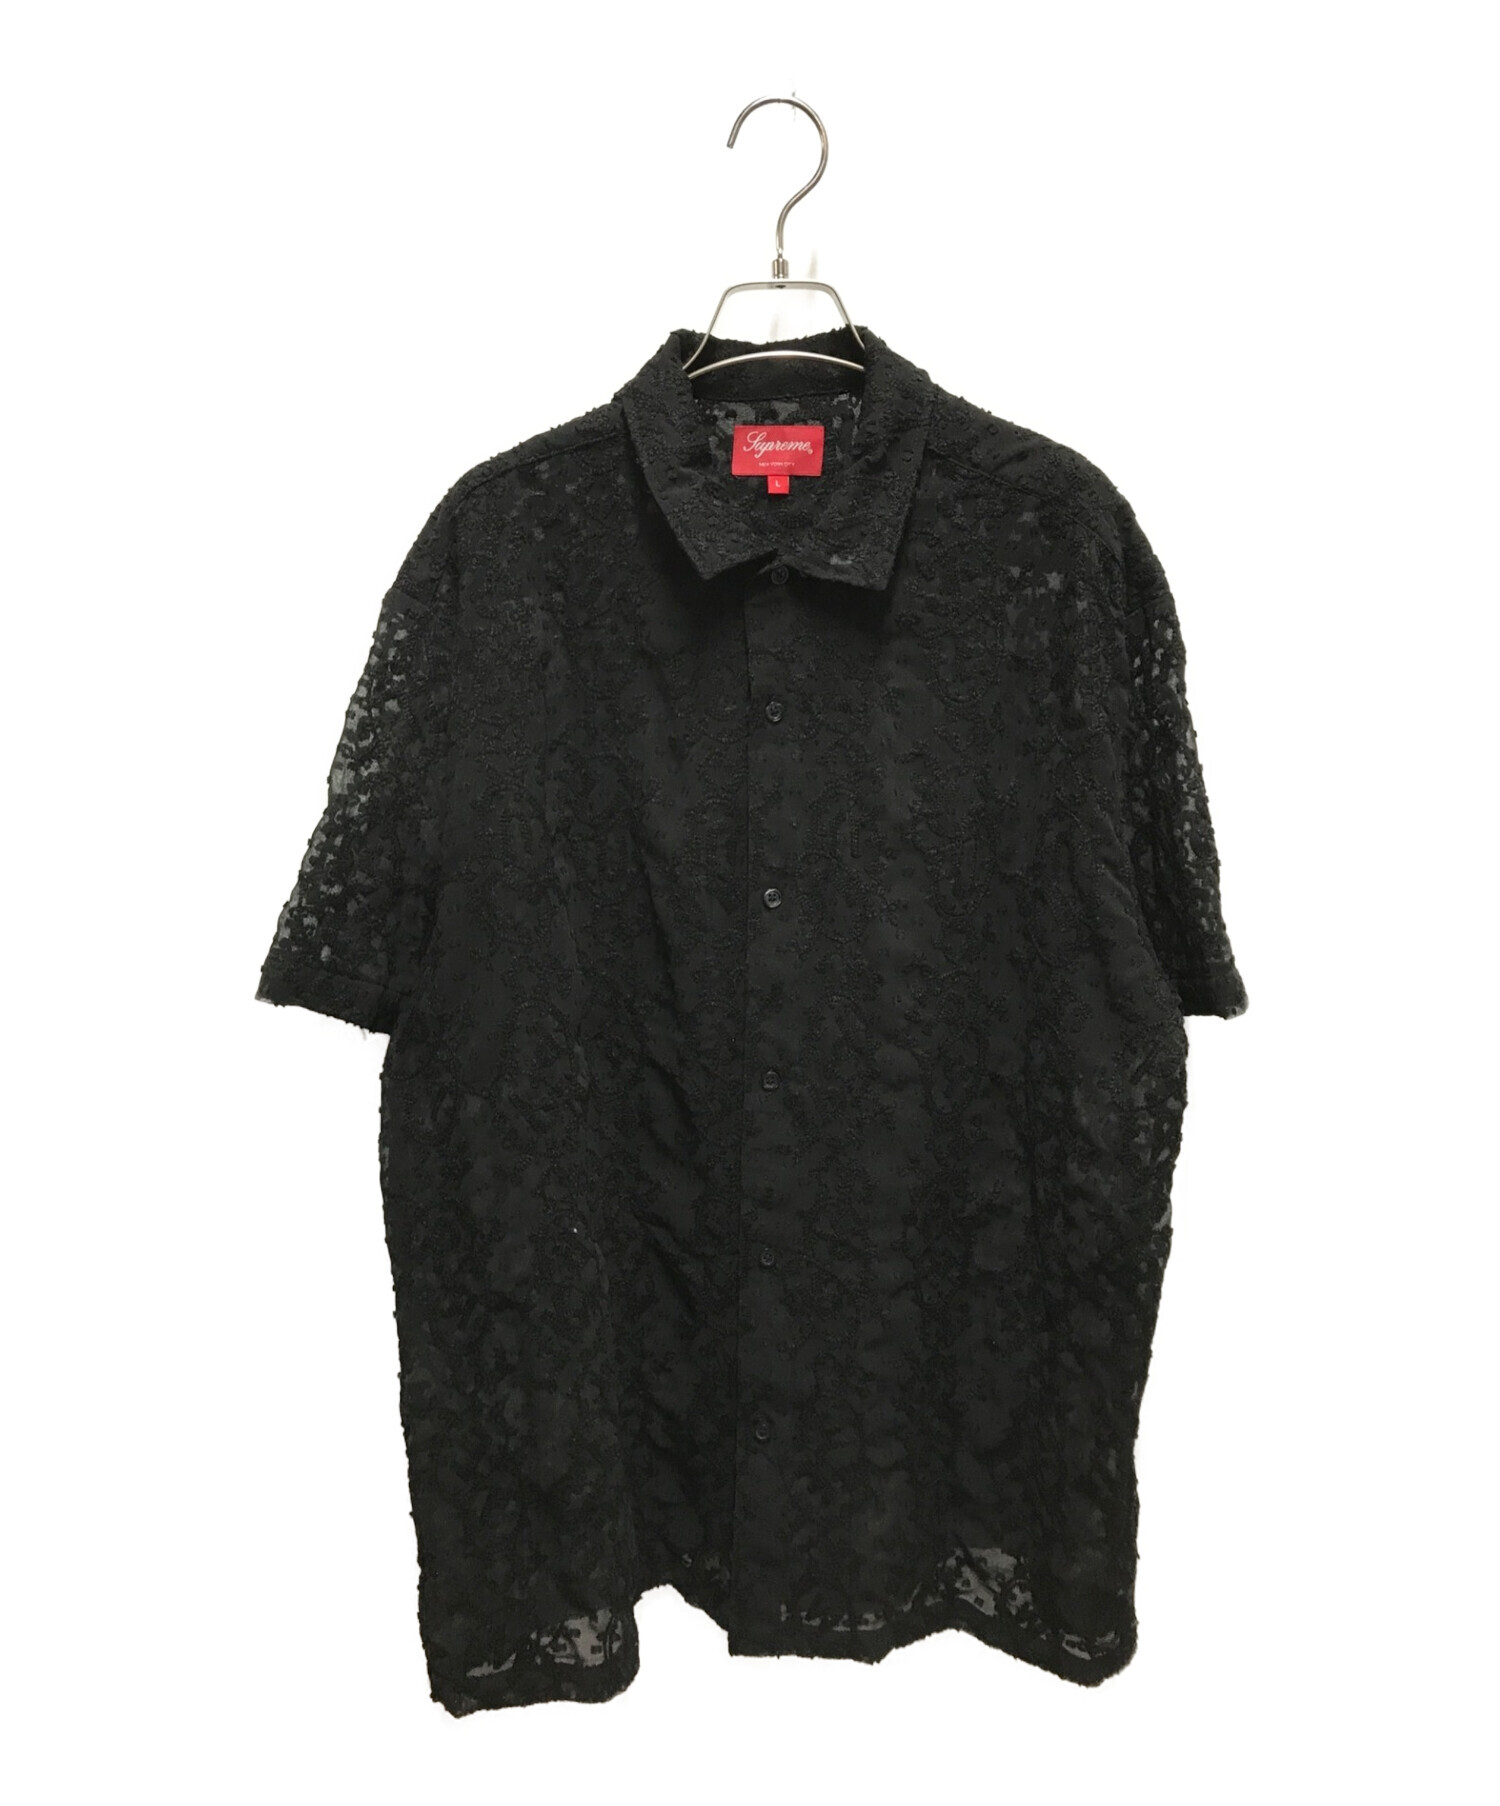 SUPREME (シュプリーム) チェインステッチシフォンシャツ / Chainstitch Chiffon S/S Shirt ブラック サイズ:L